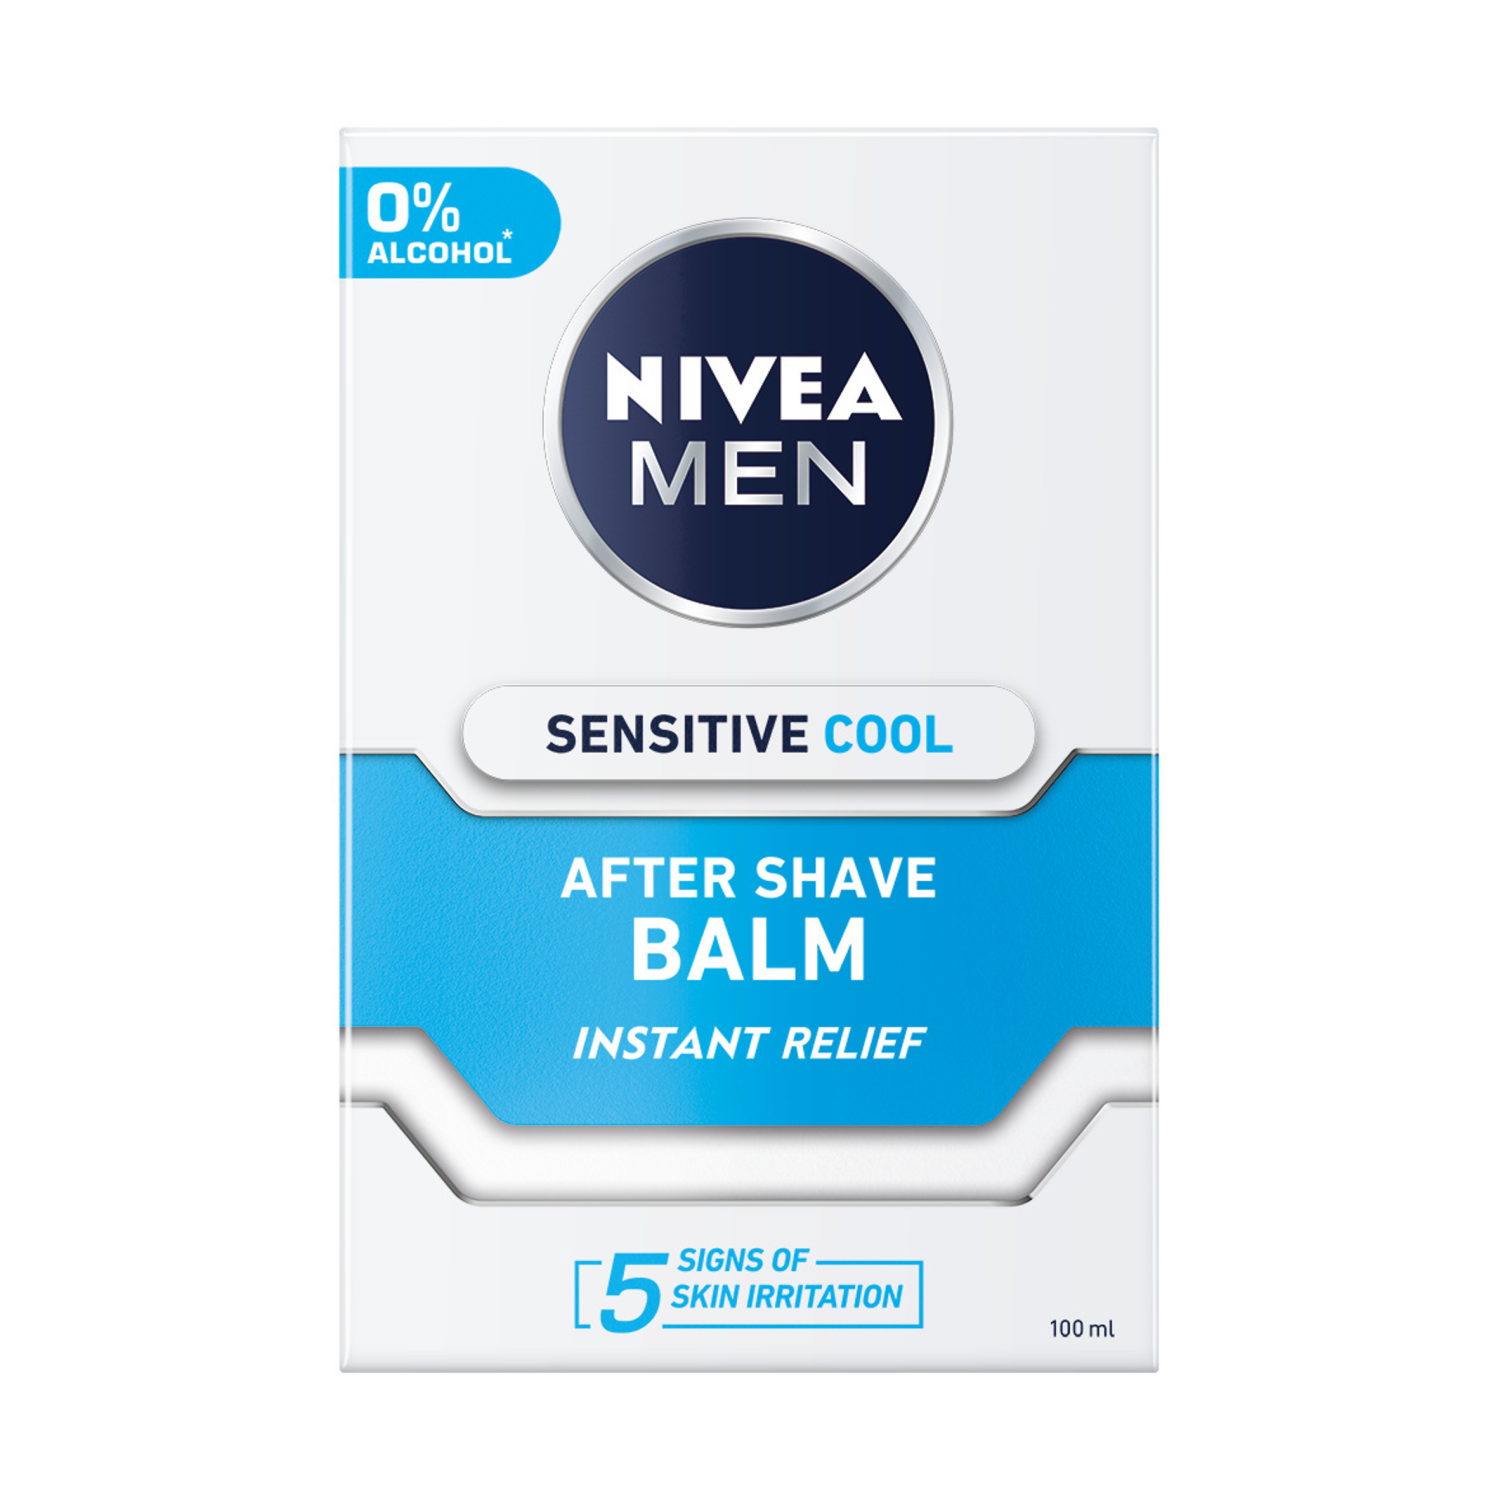 Nivea Men Sensitive охлаждающий бальзам после бритья, 100 мл